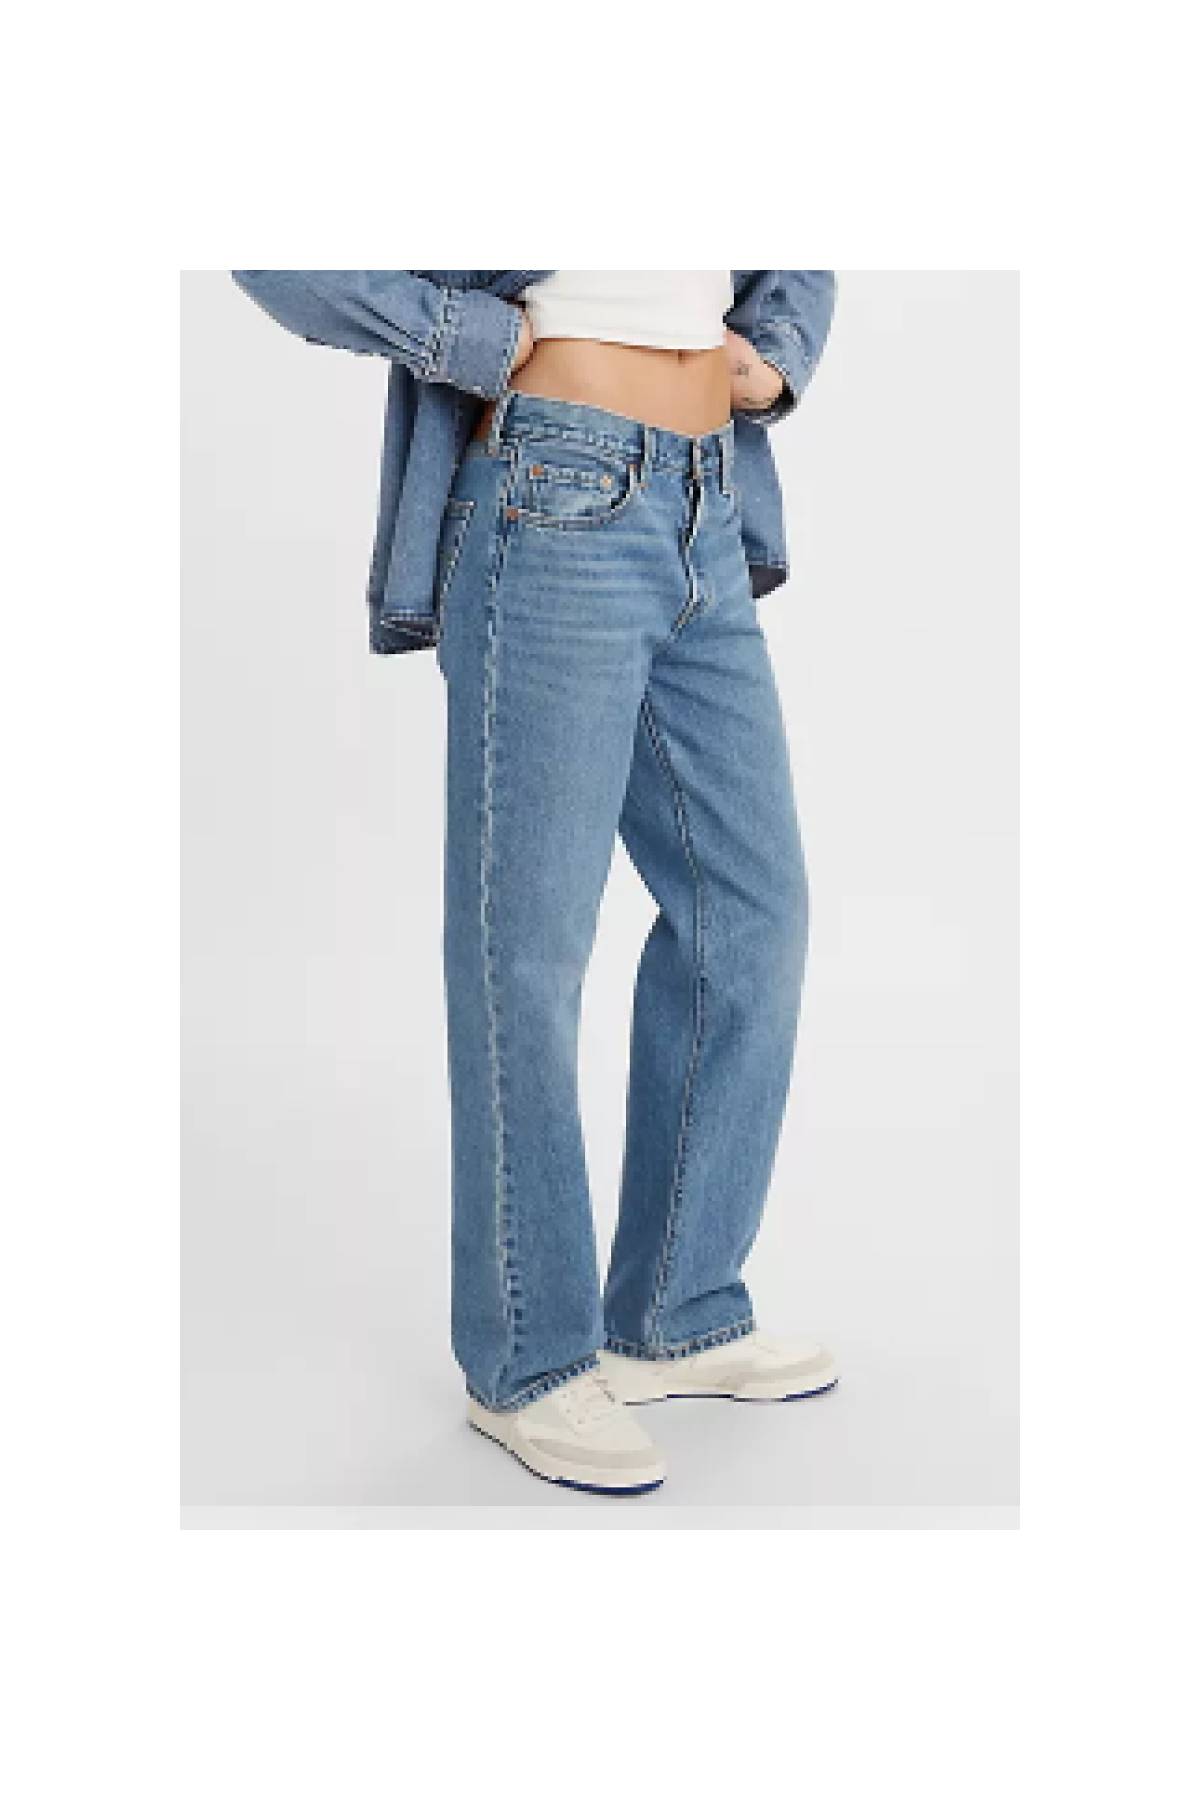 model wearing 501 original jeans